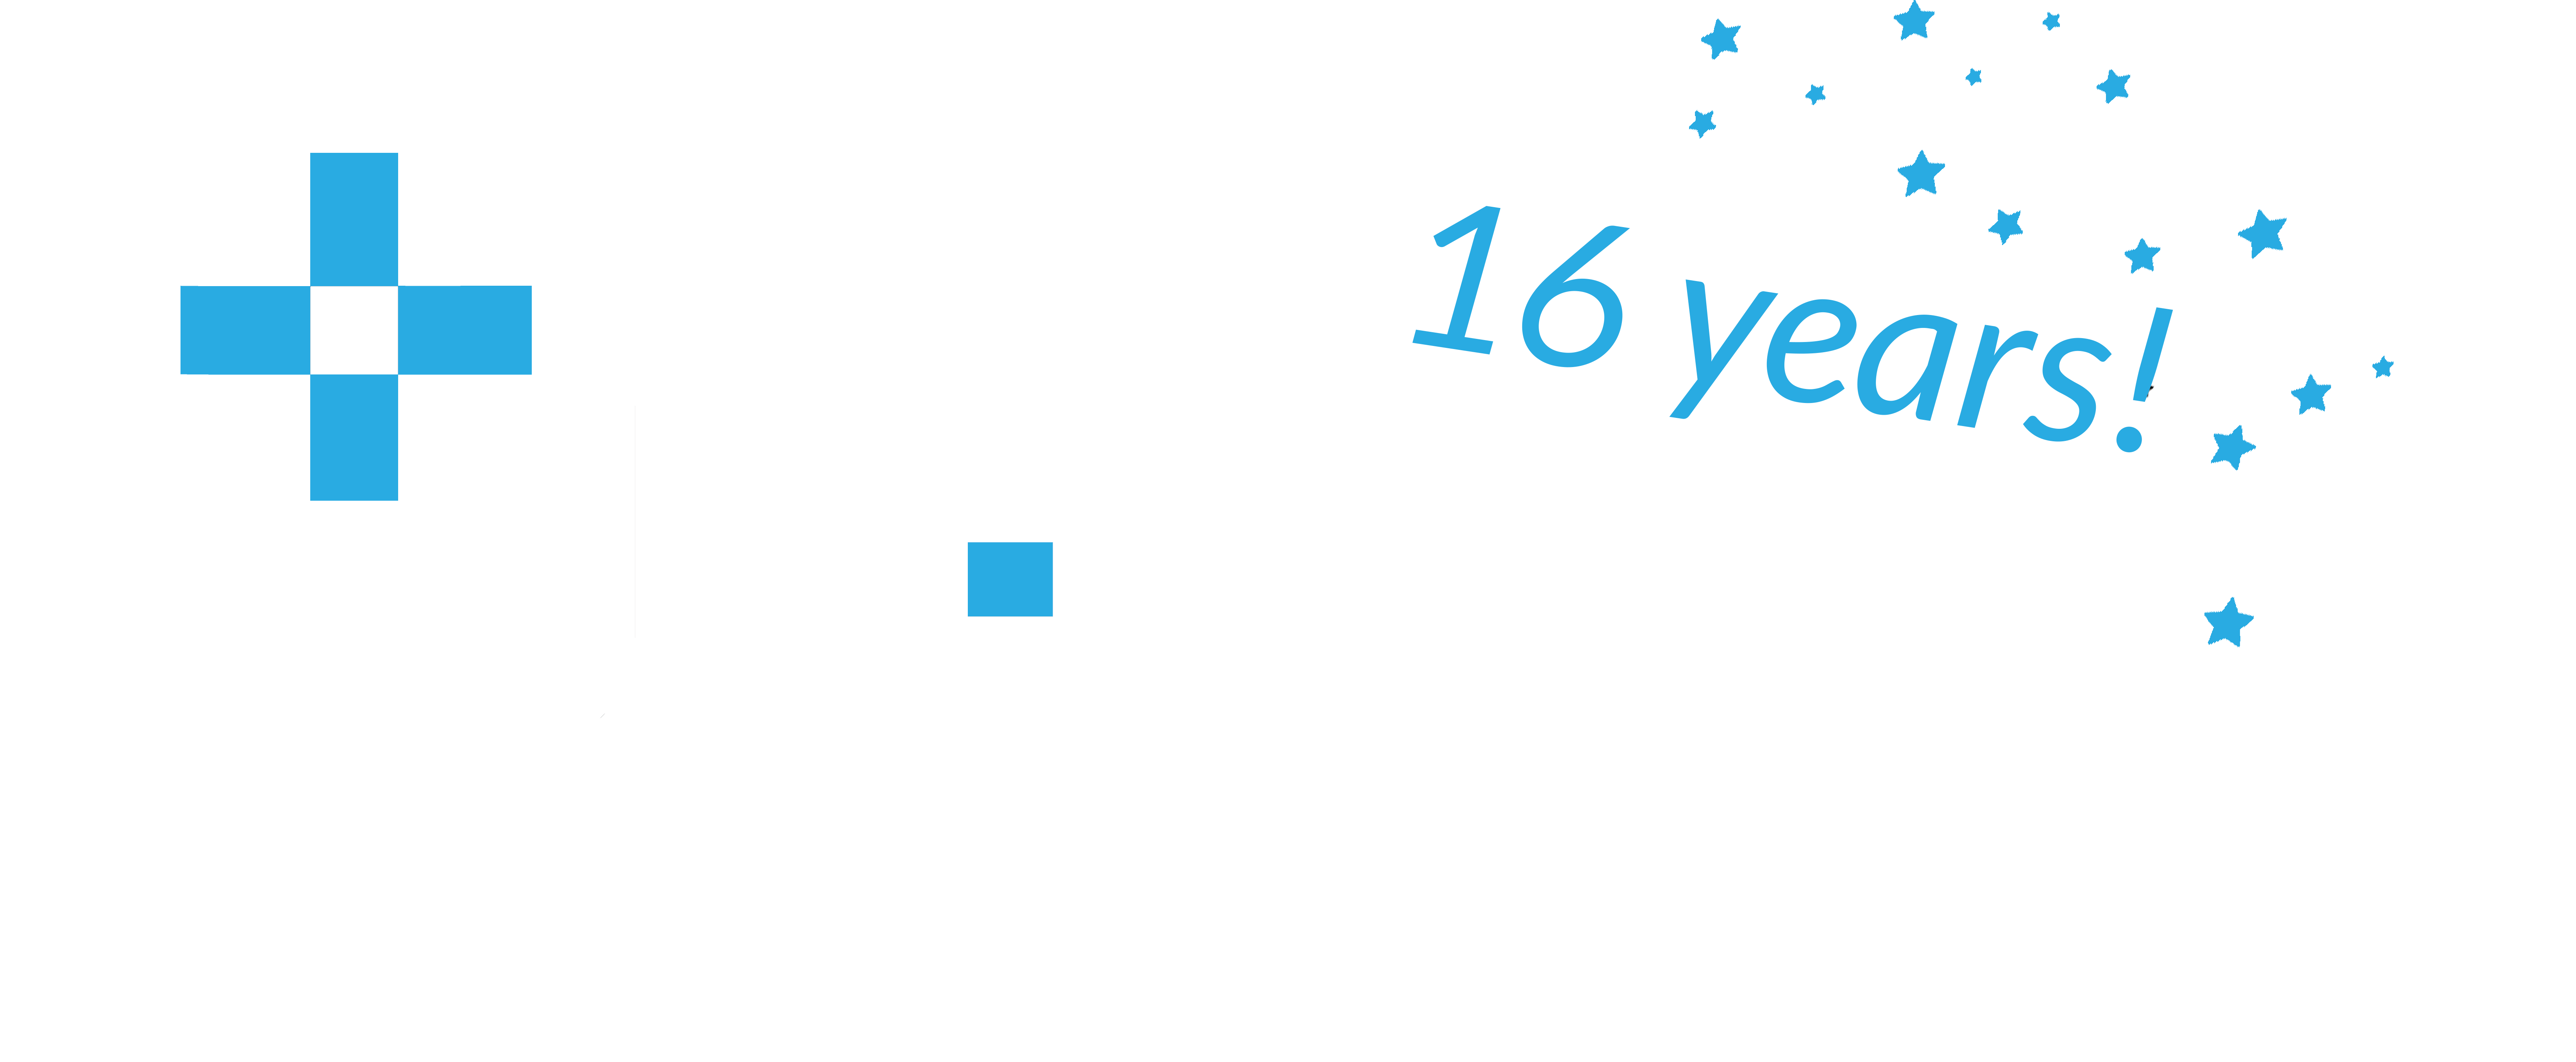 JYFEL Corporation